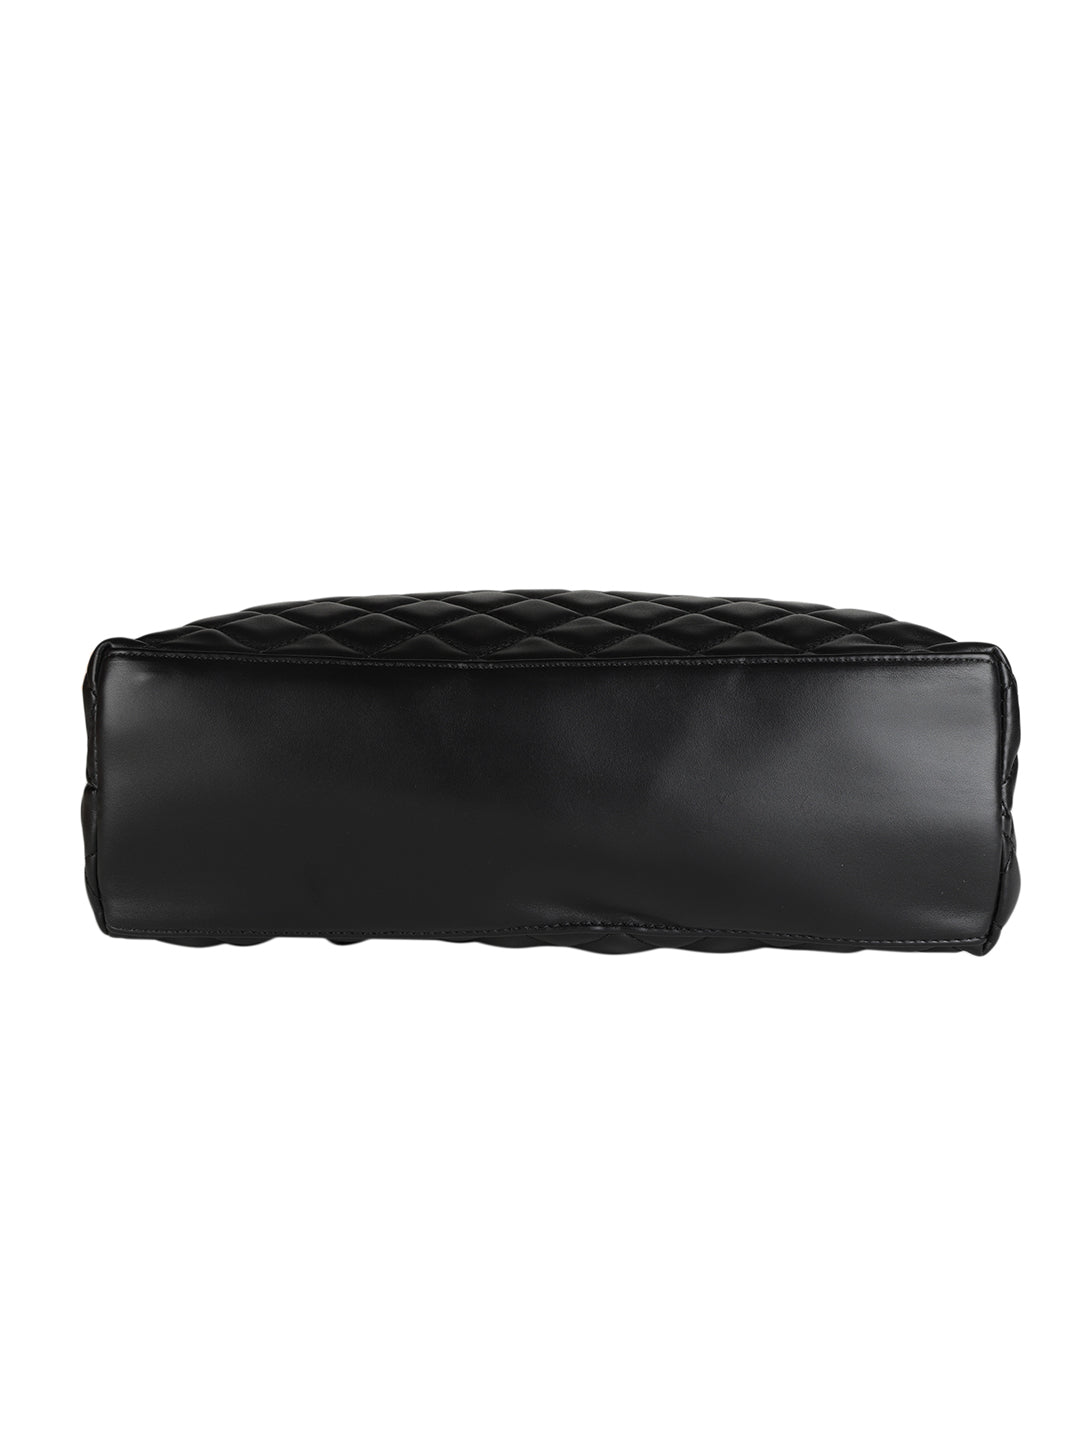 MINI WESST Black Casual Solid Sling Bag(MWHB152BL)